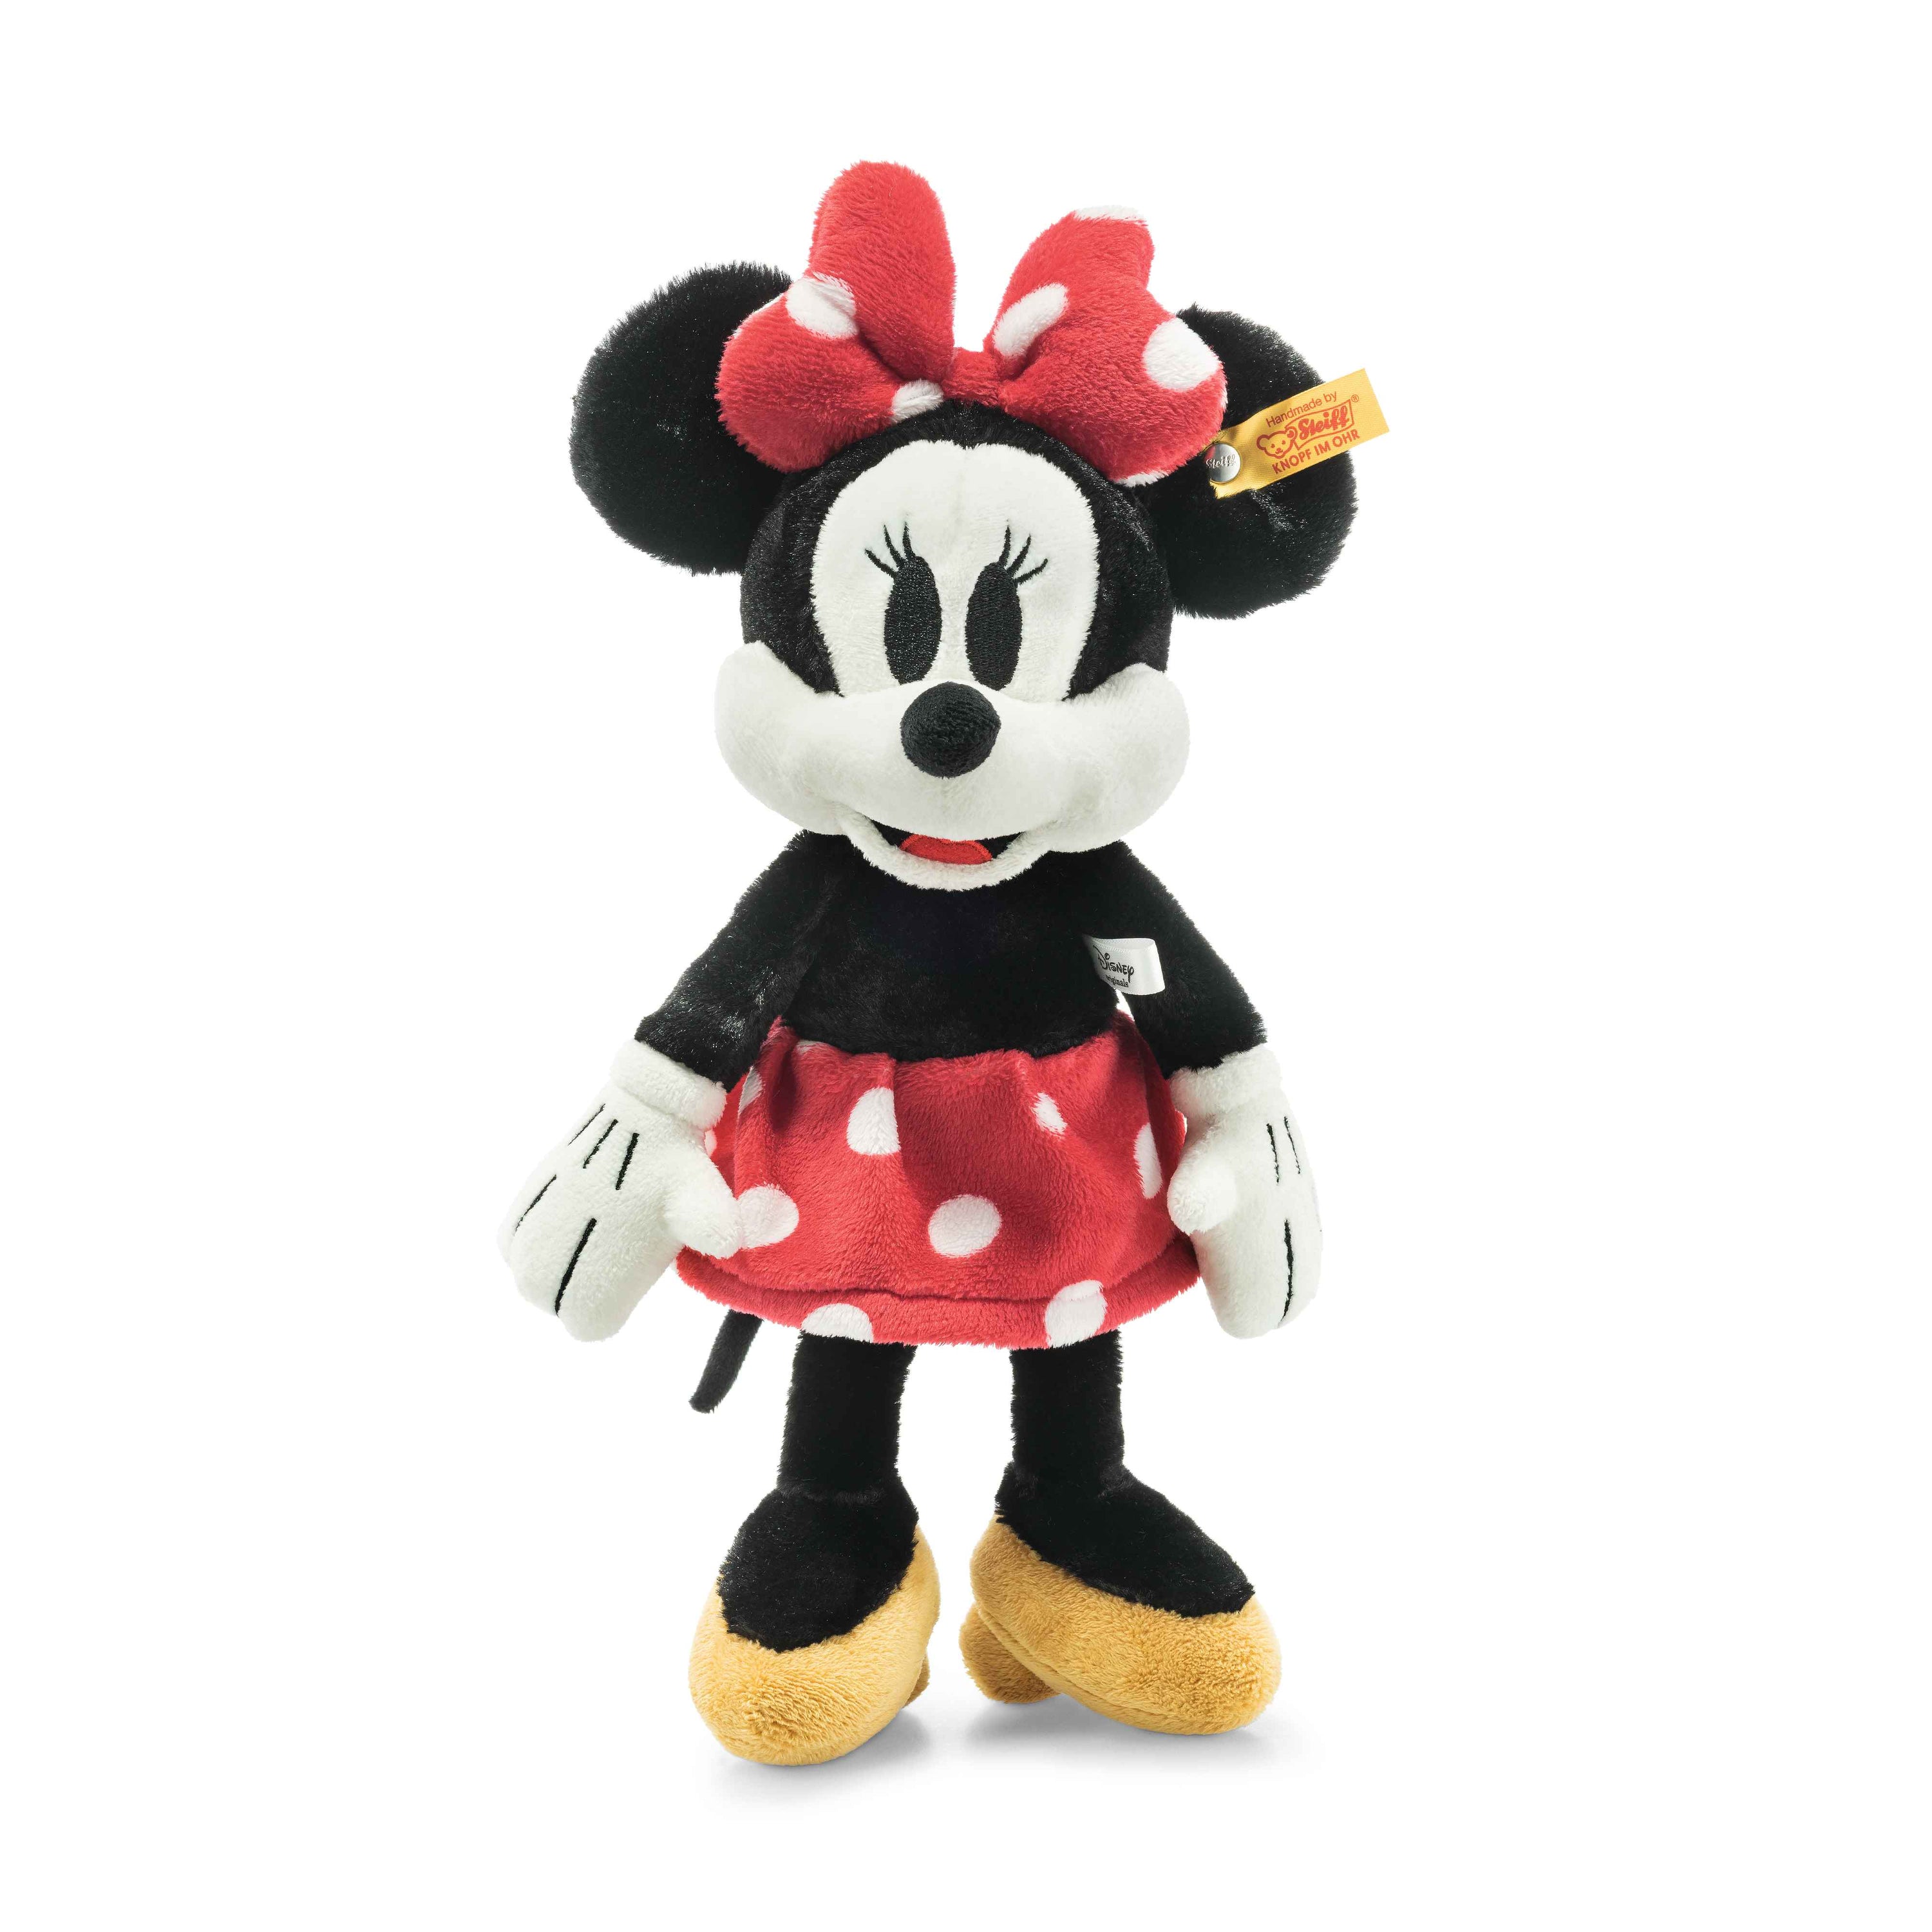 Disney's Minnie Mouse Stuffed Plush Toy